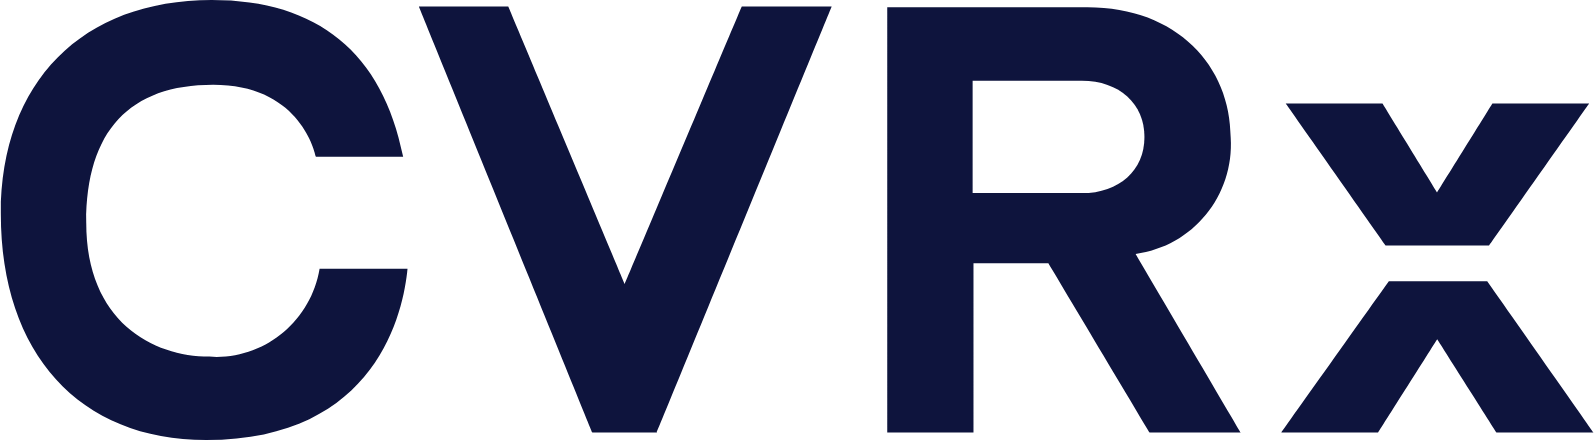 CVRx logo (transparent PNG)